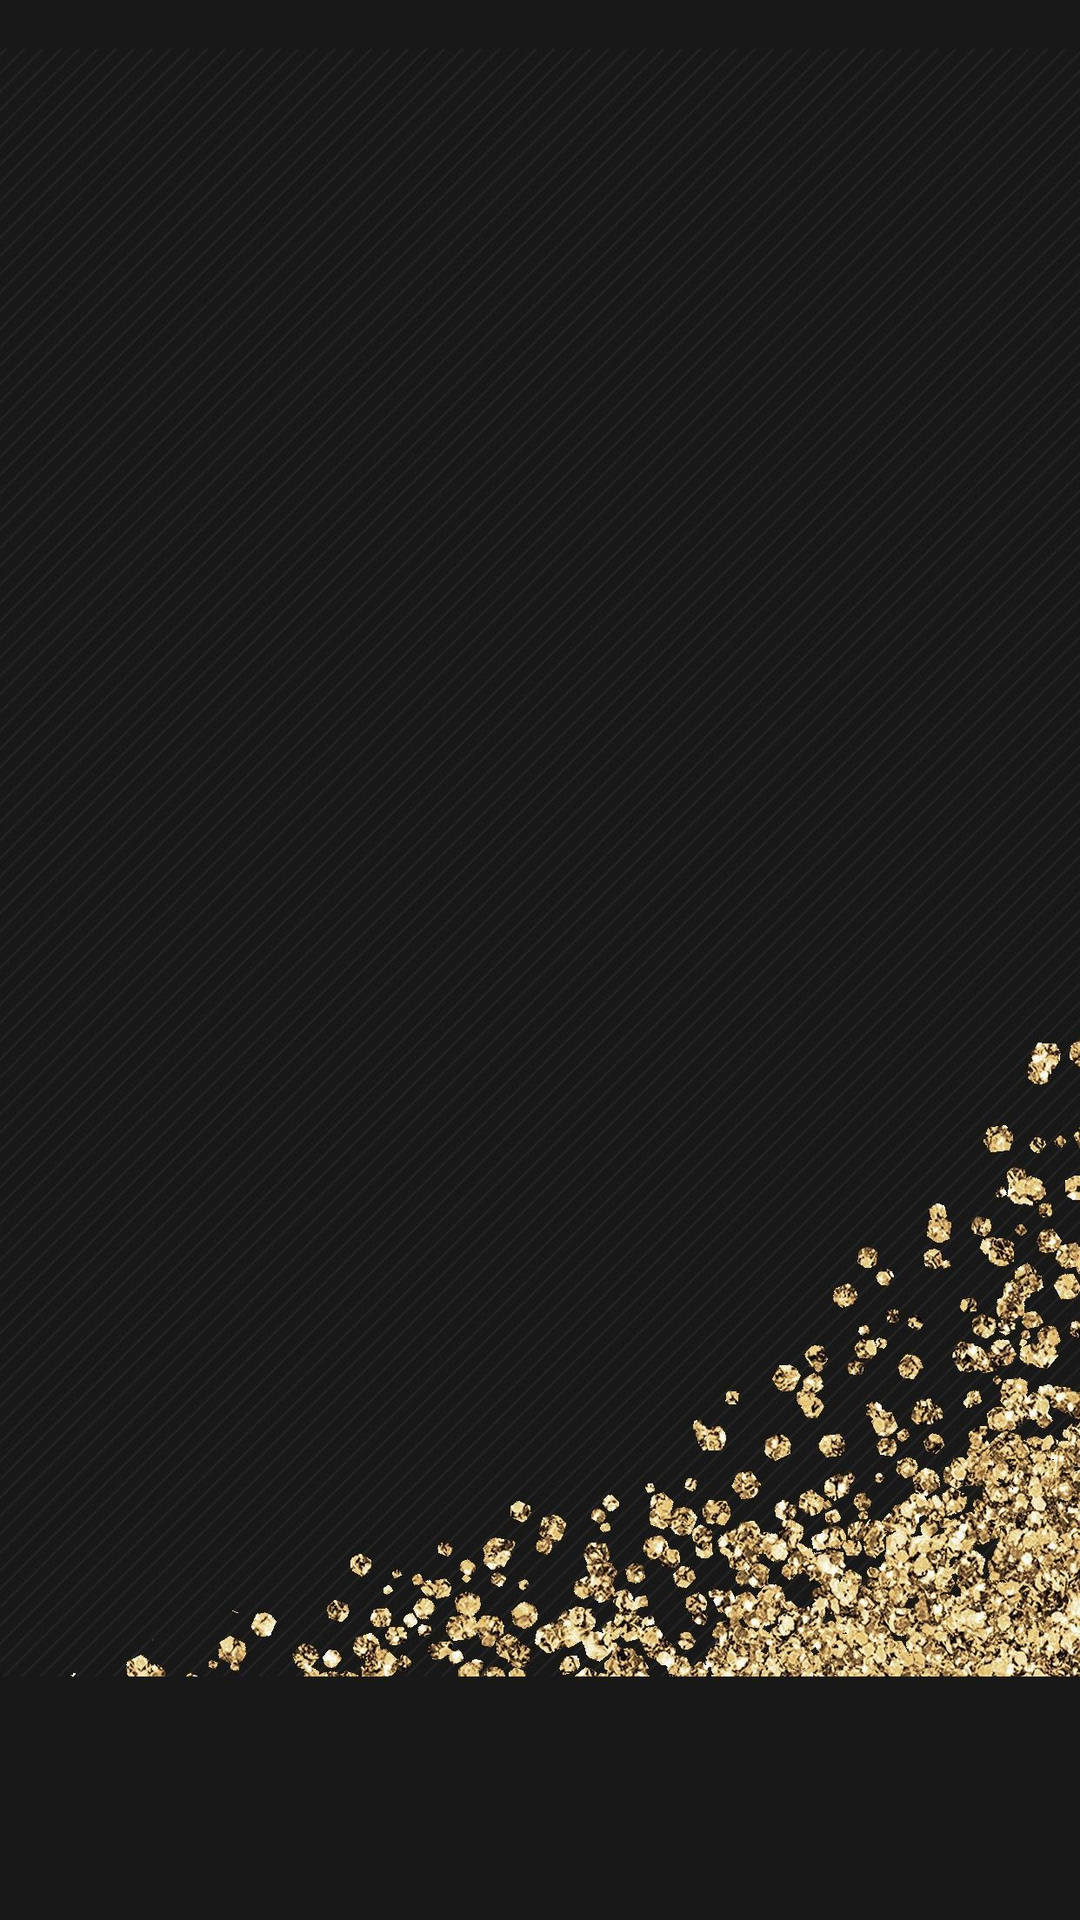 Dark Android Gold Crystal Wallpaper